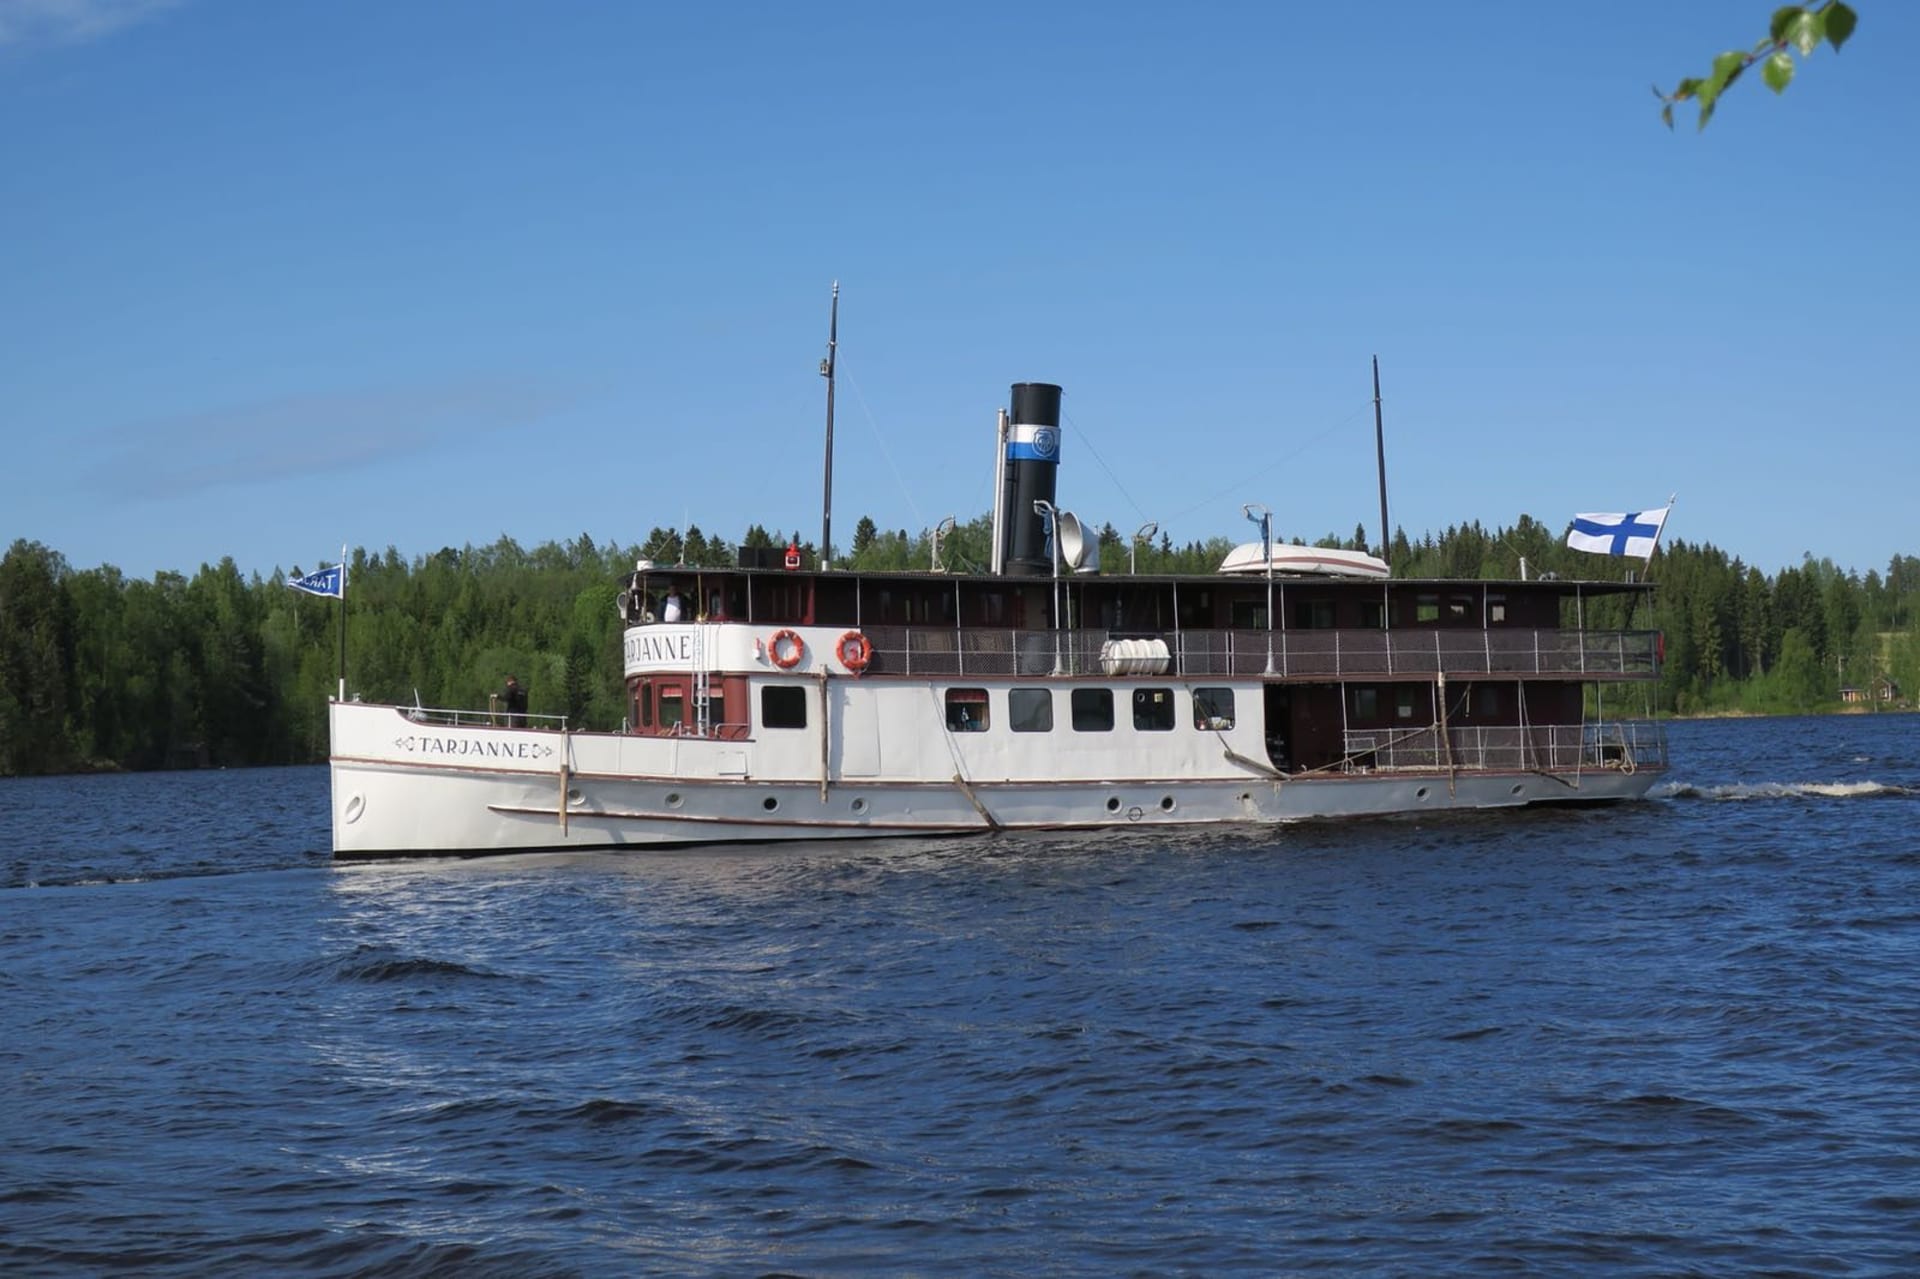 Tarjanne is a 114 years old steamship.